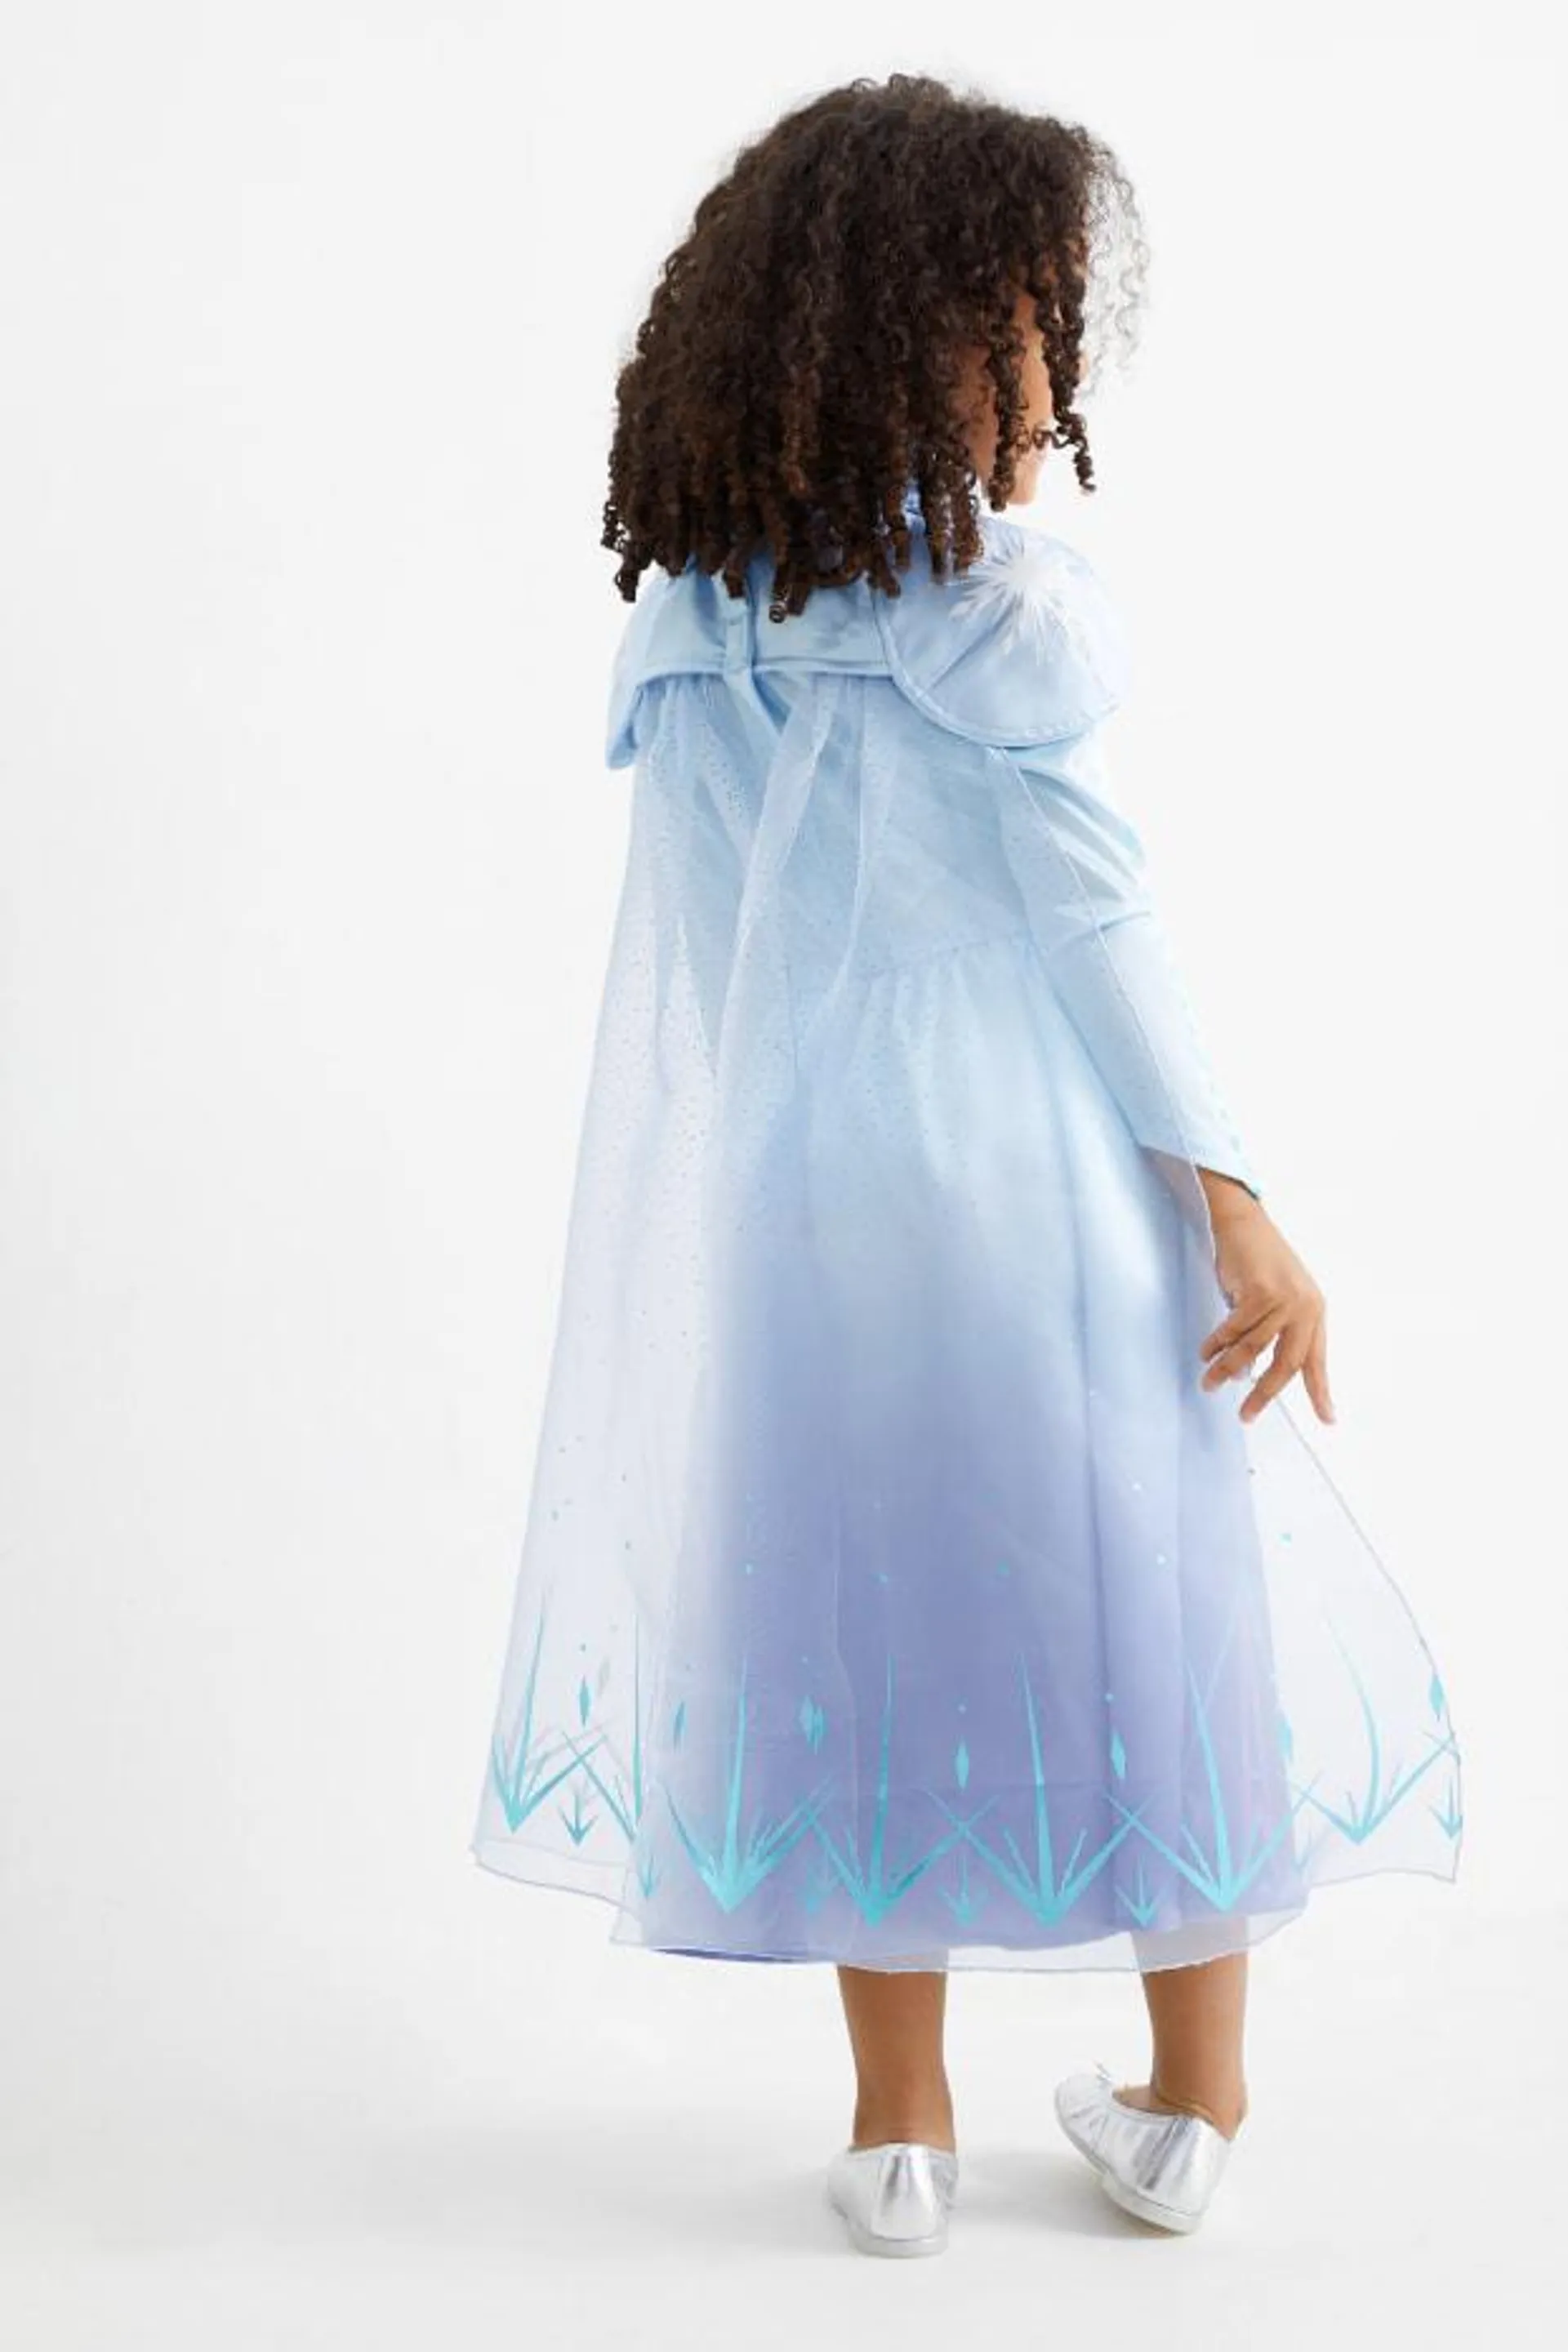 Disney princess - Elsa dress